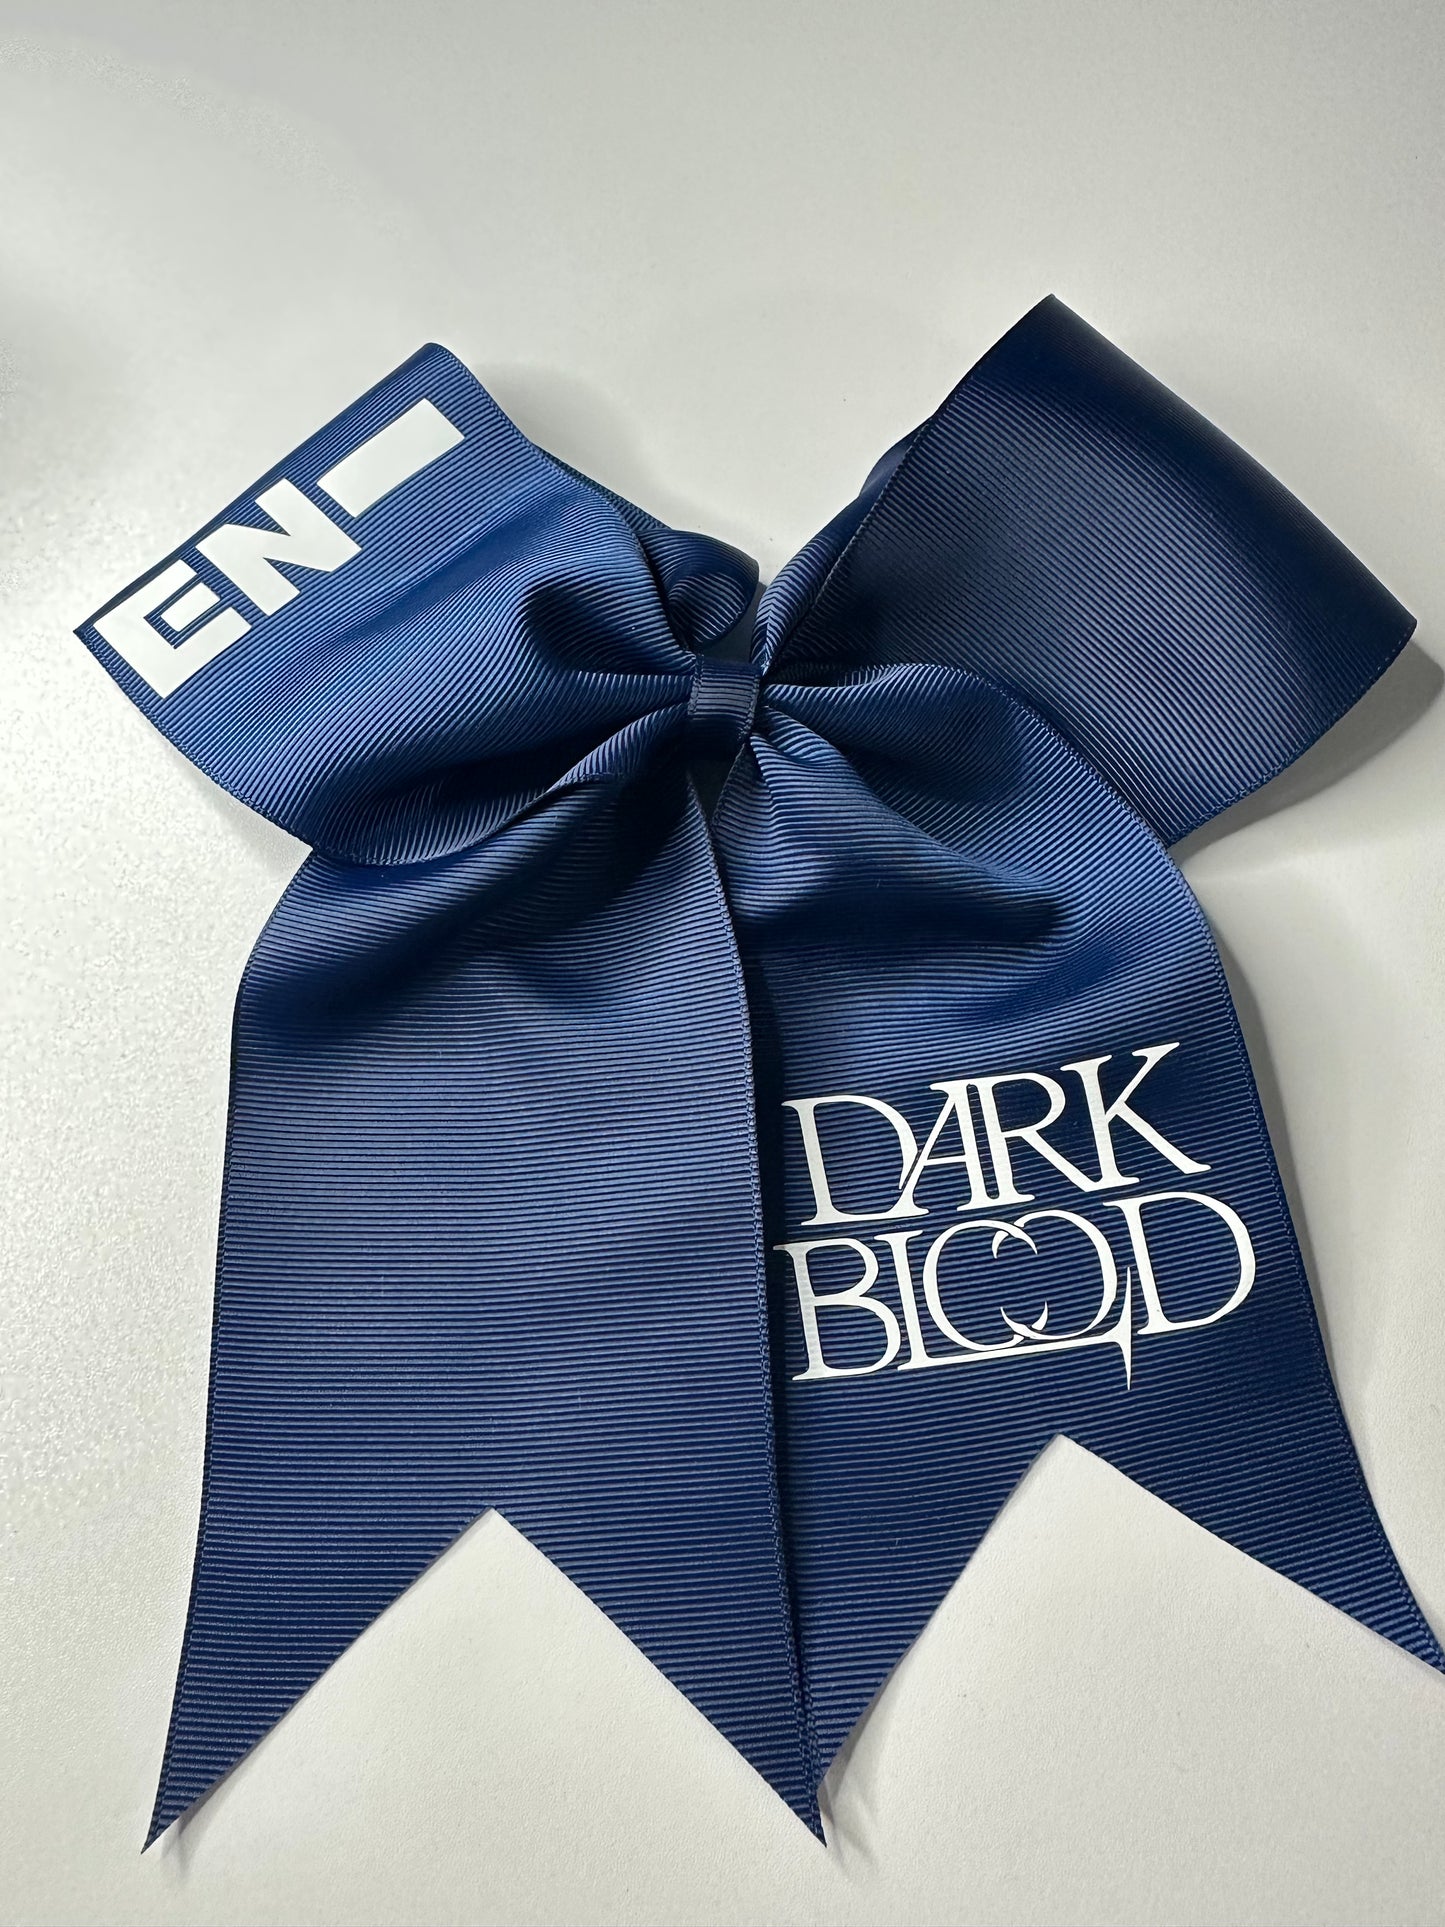 Dark Blood Enhyphen Bows for Lightstick or Hair